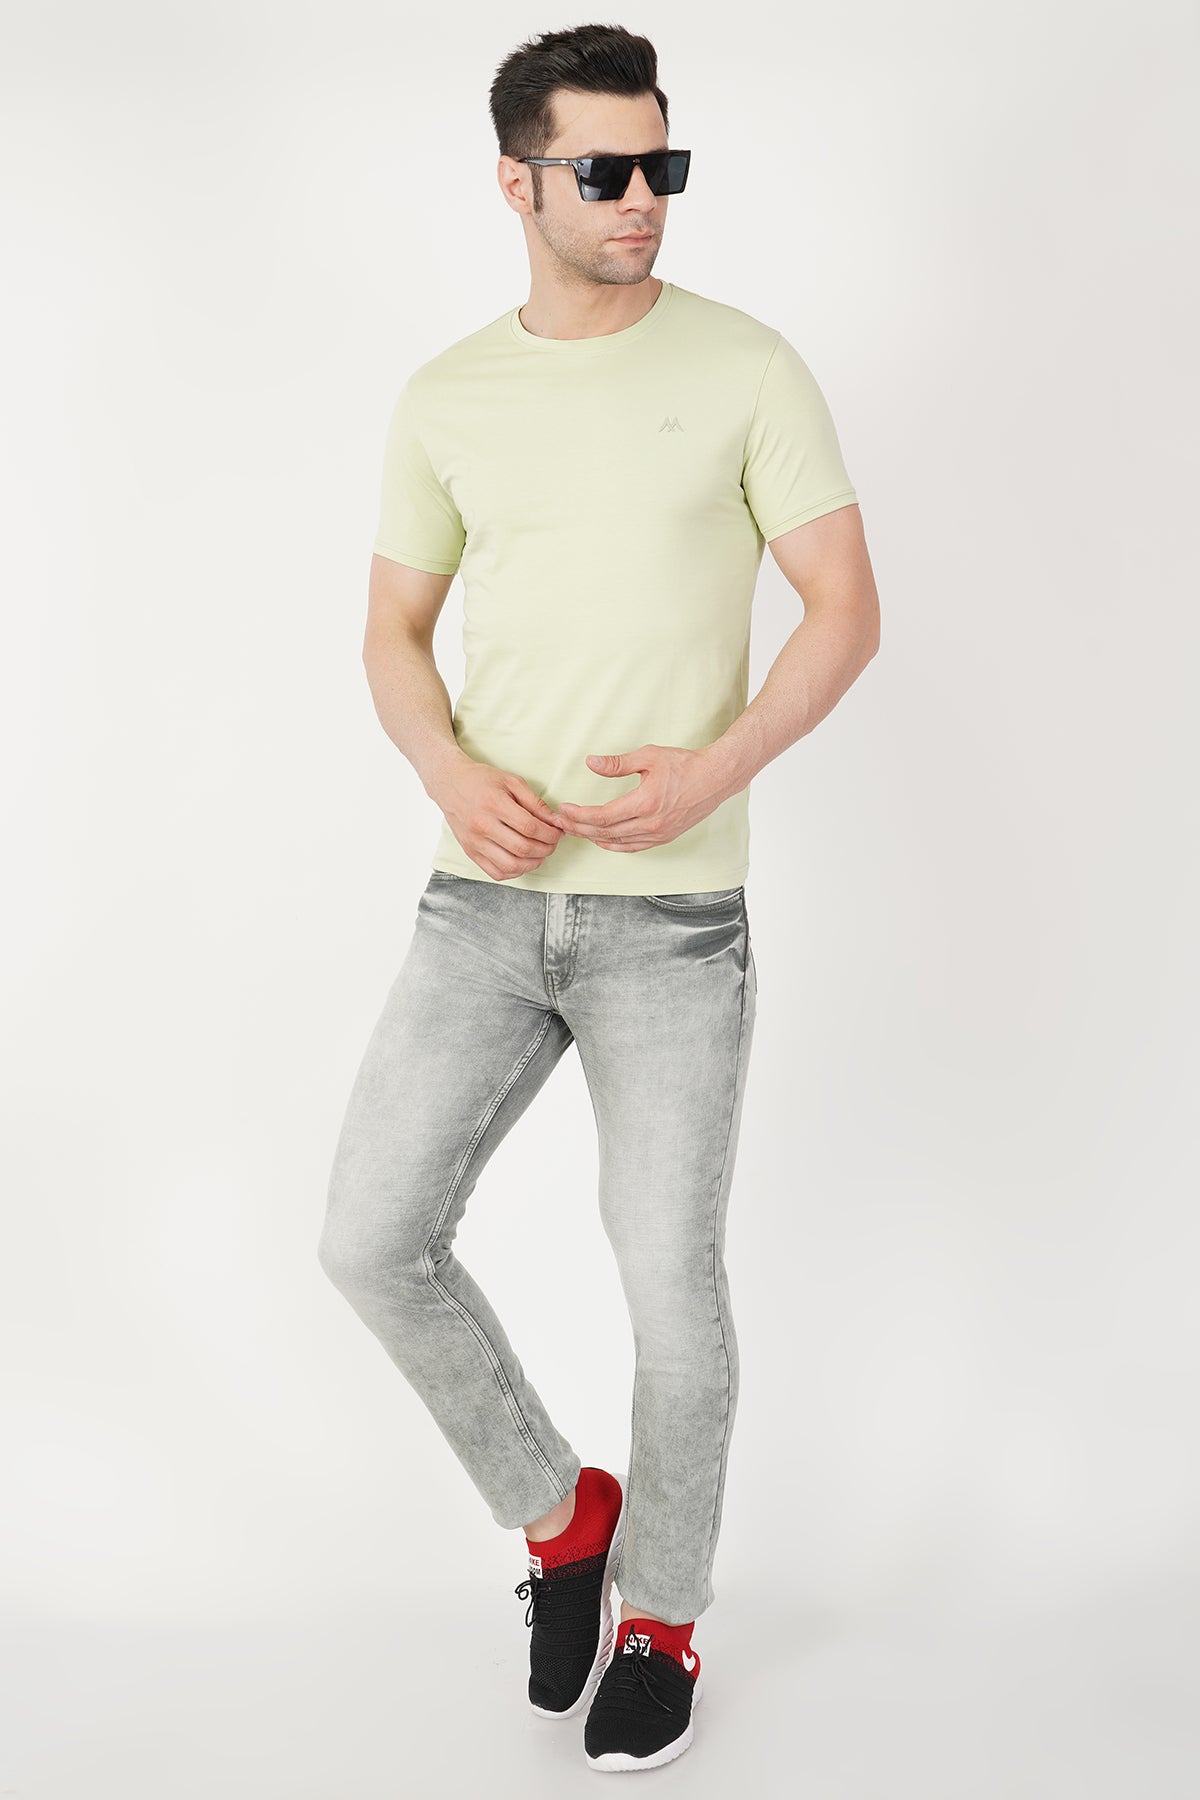 Men's Light Grey Ankle Fit Jeans